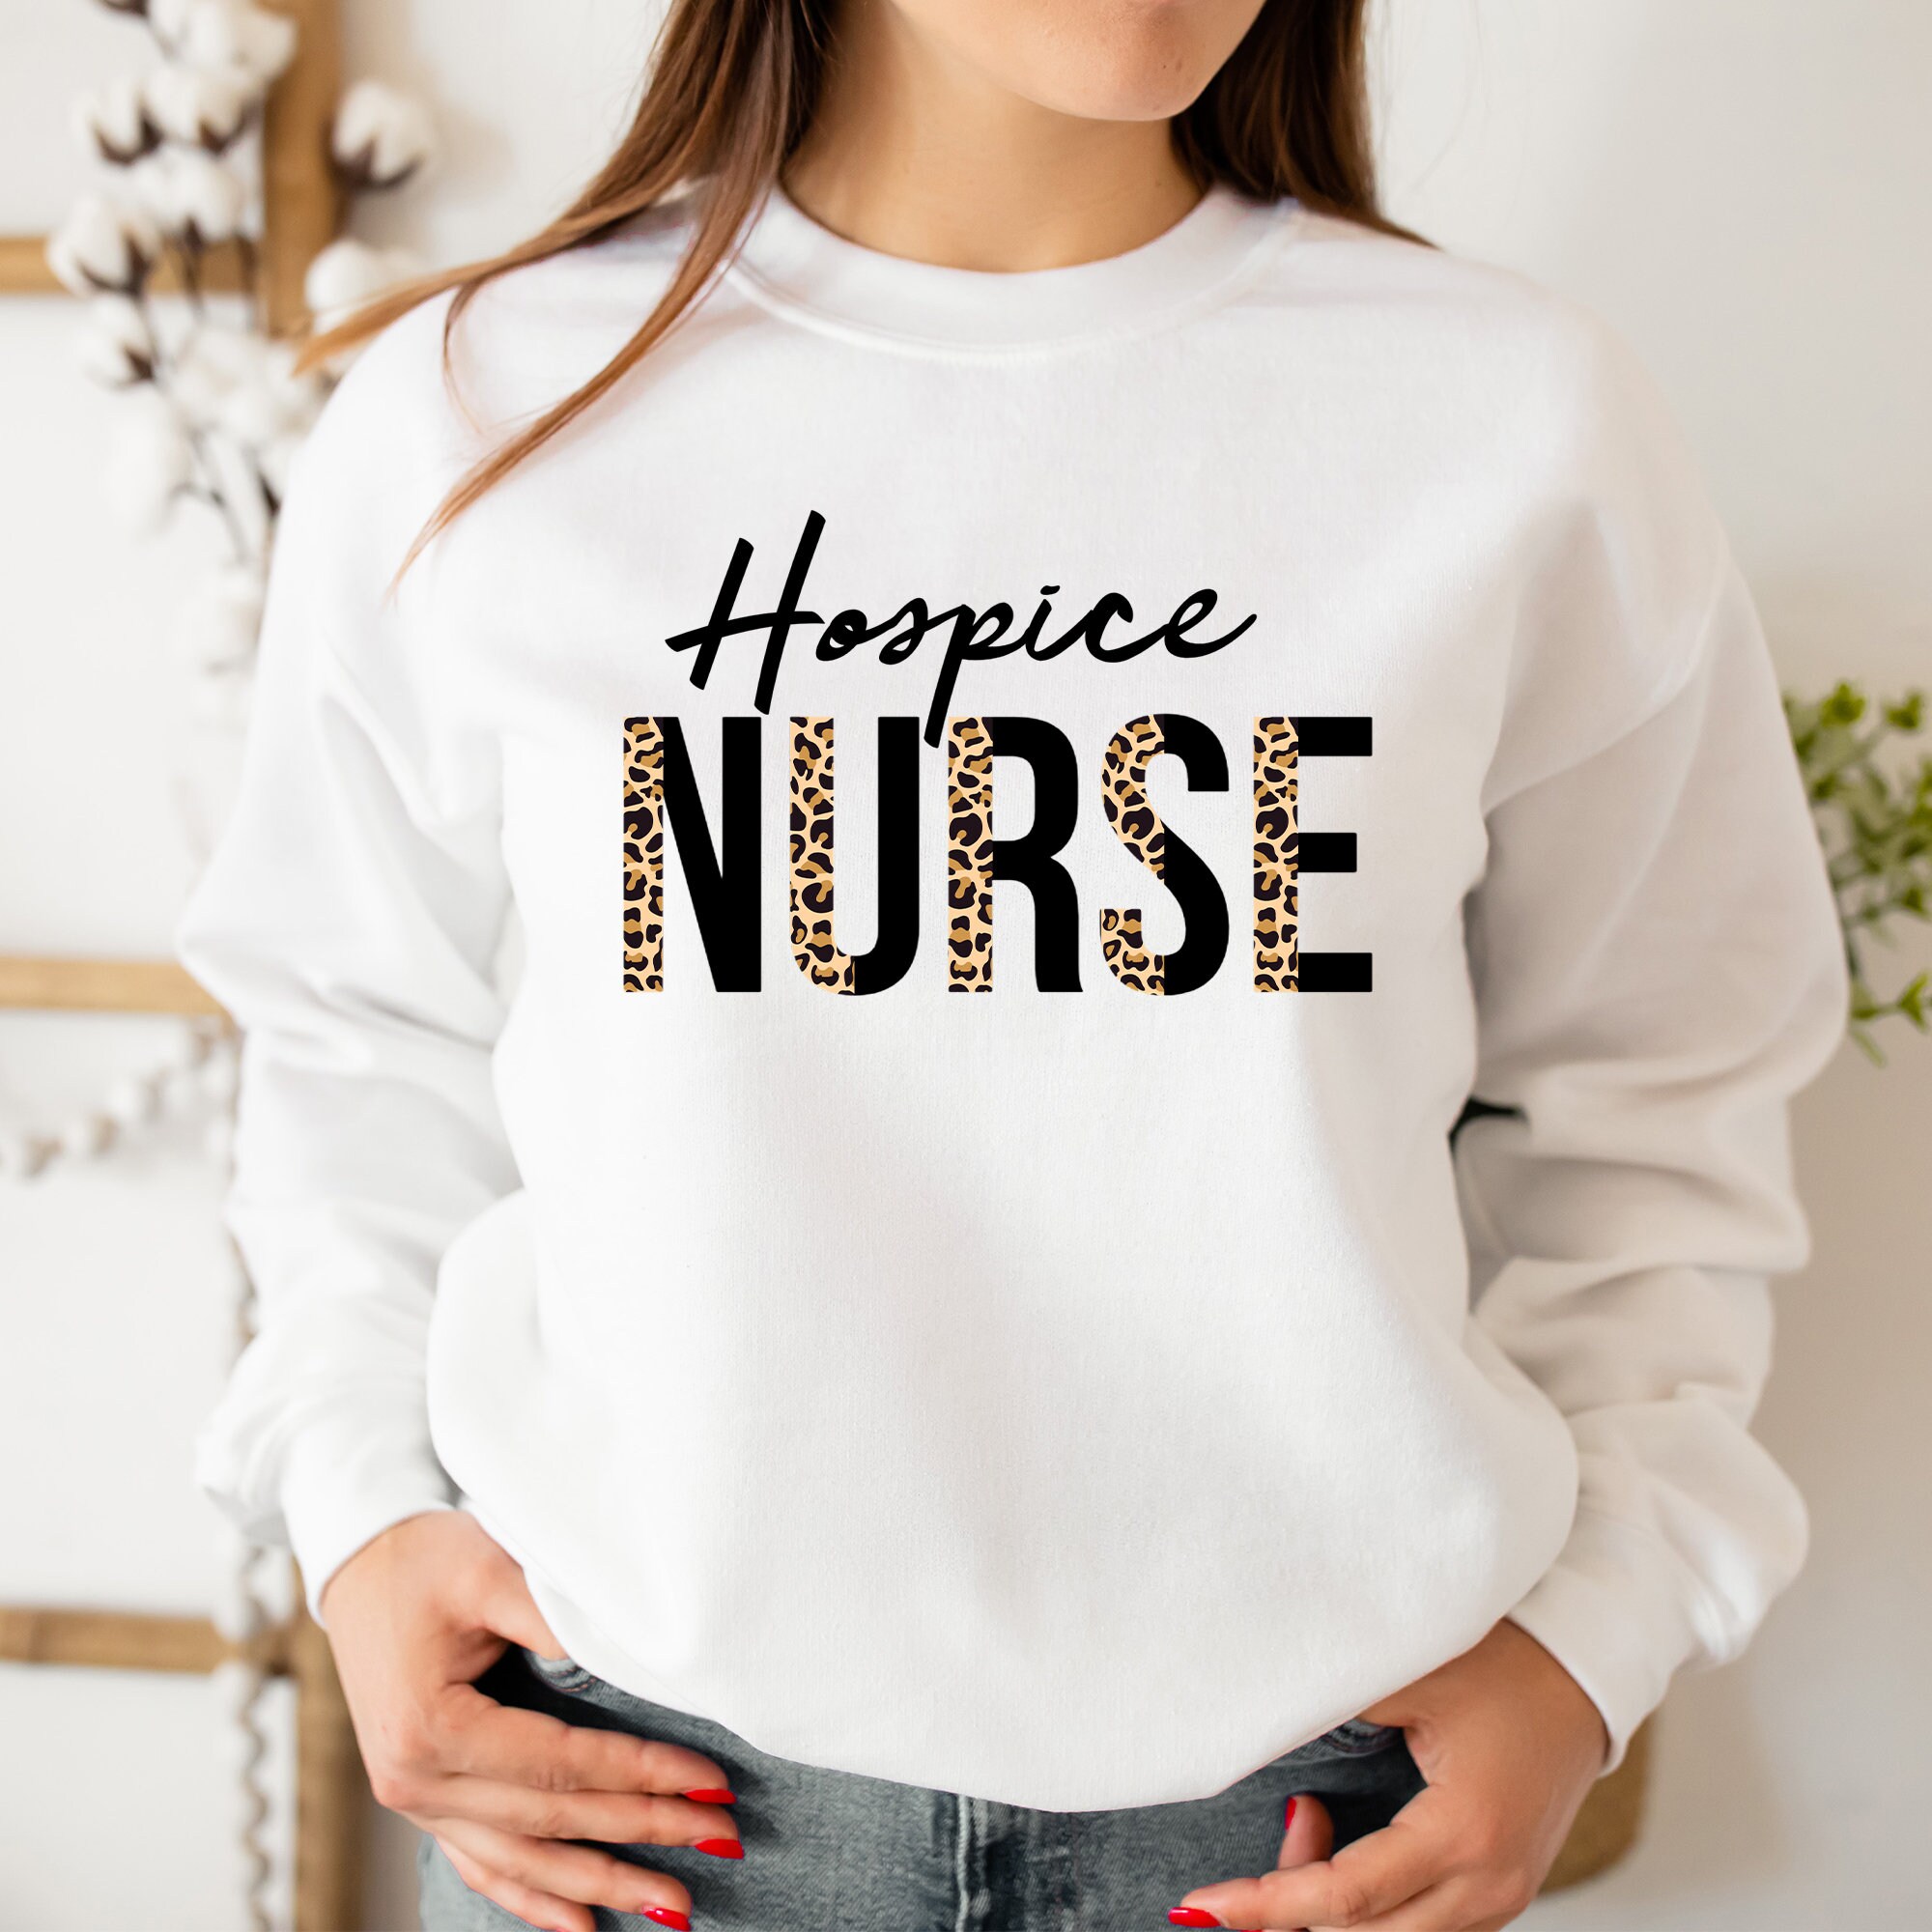 Nursing Student Problems T-shirts Hoodies S-3XL NEW